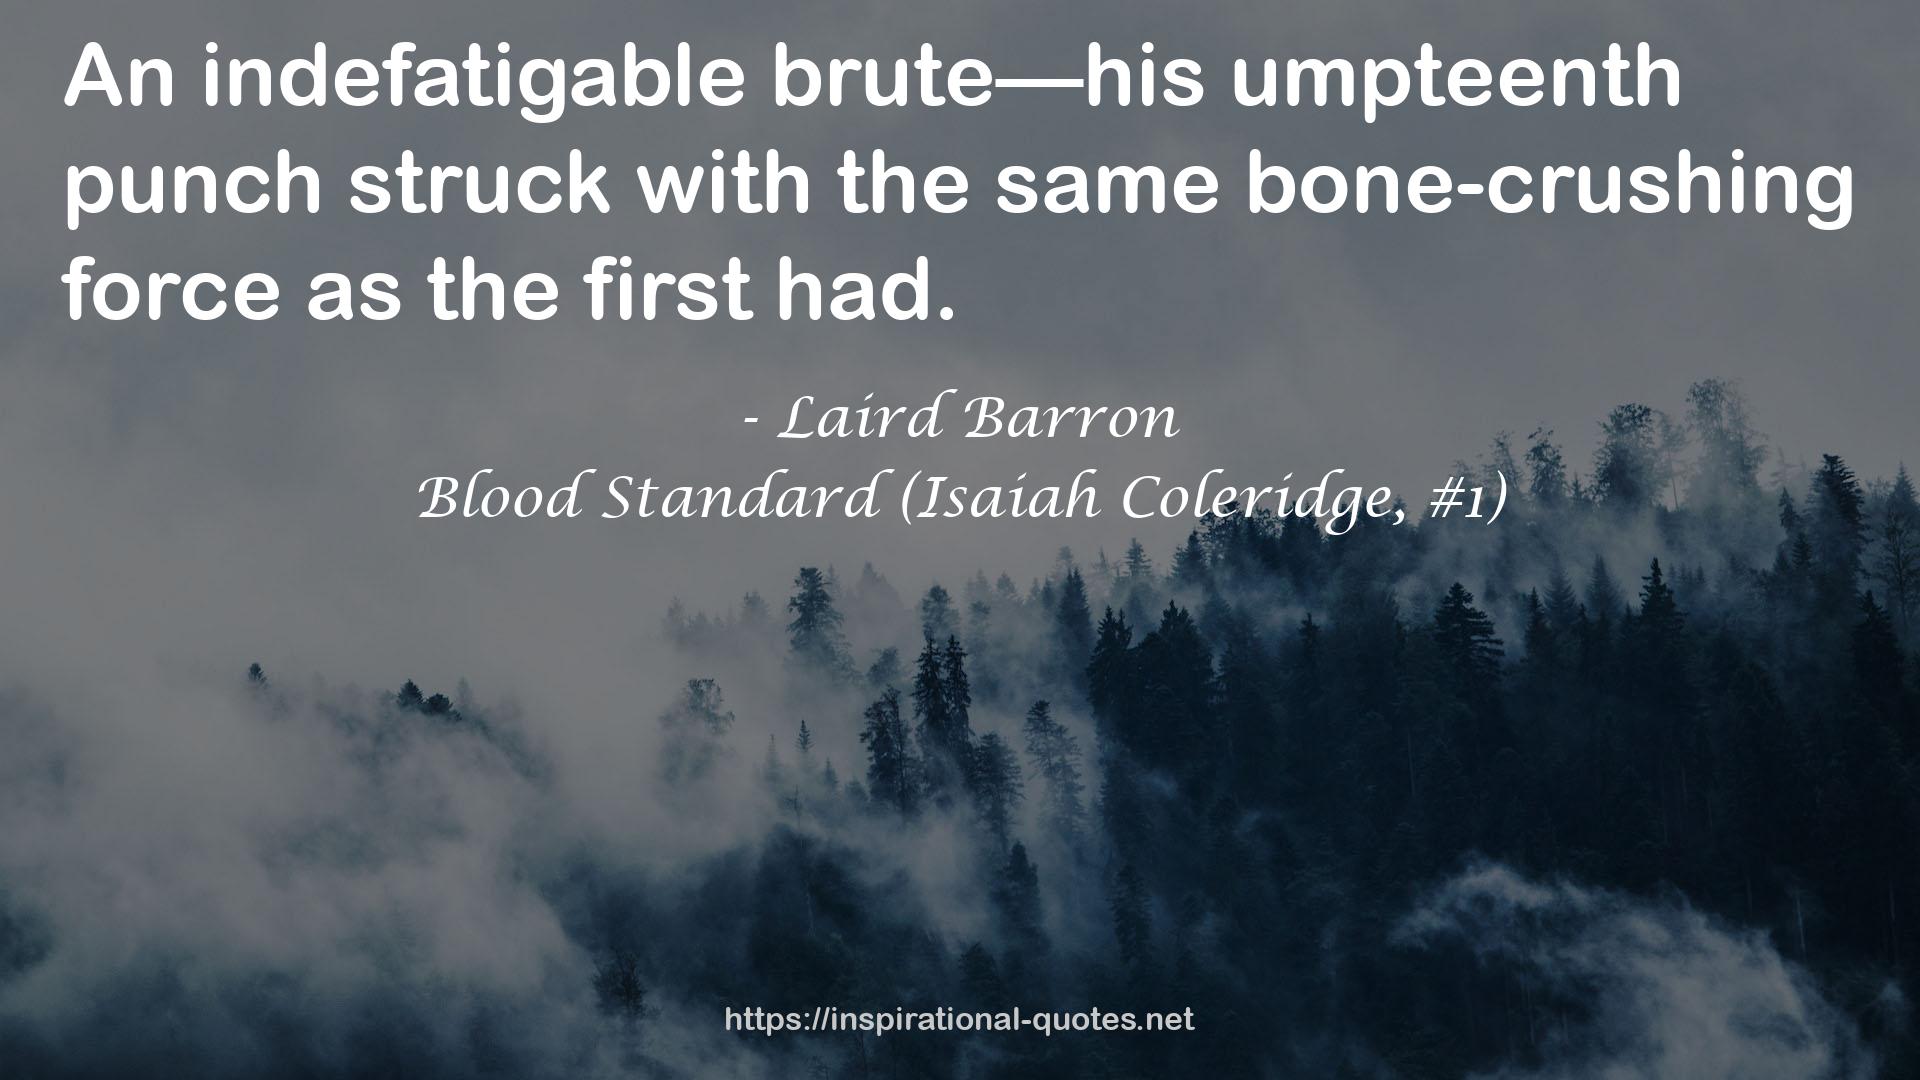 Blood Standard (Isaiah Coleridge, #1) QUOTES